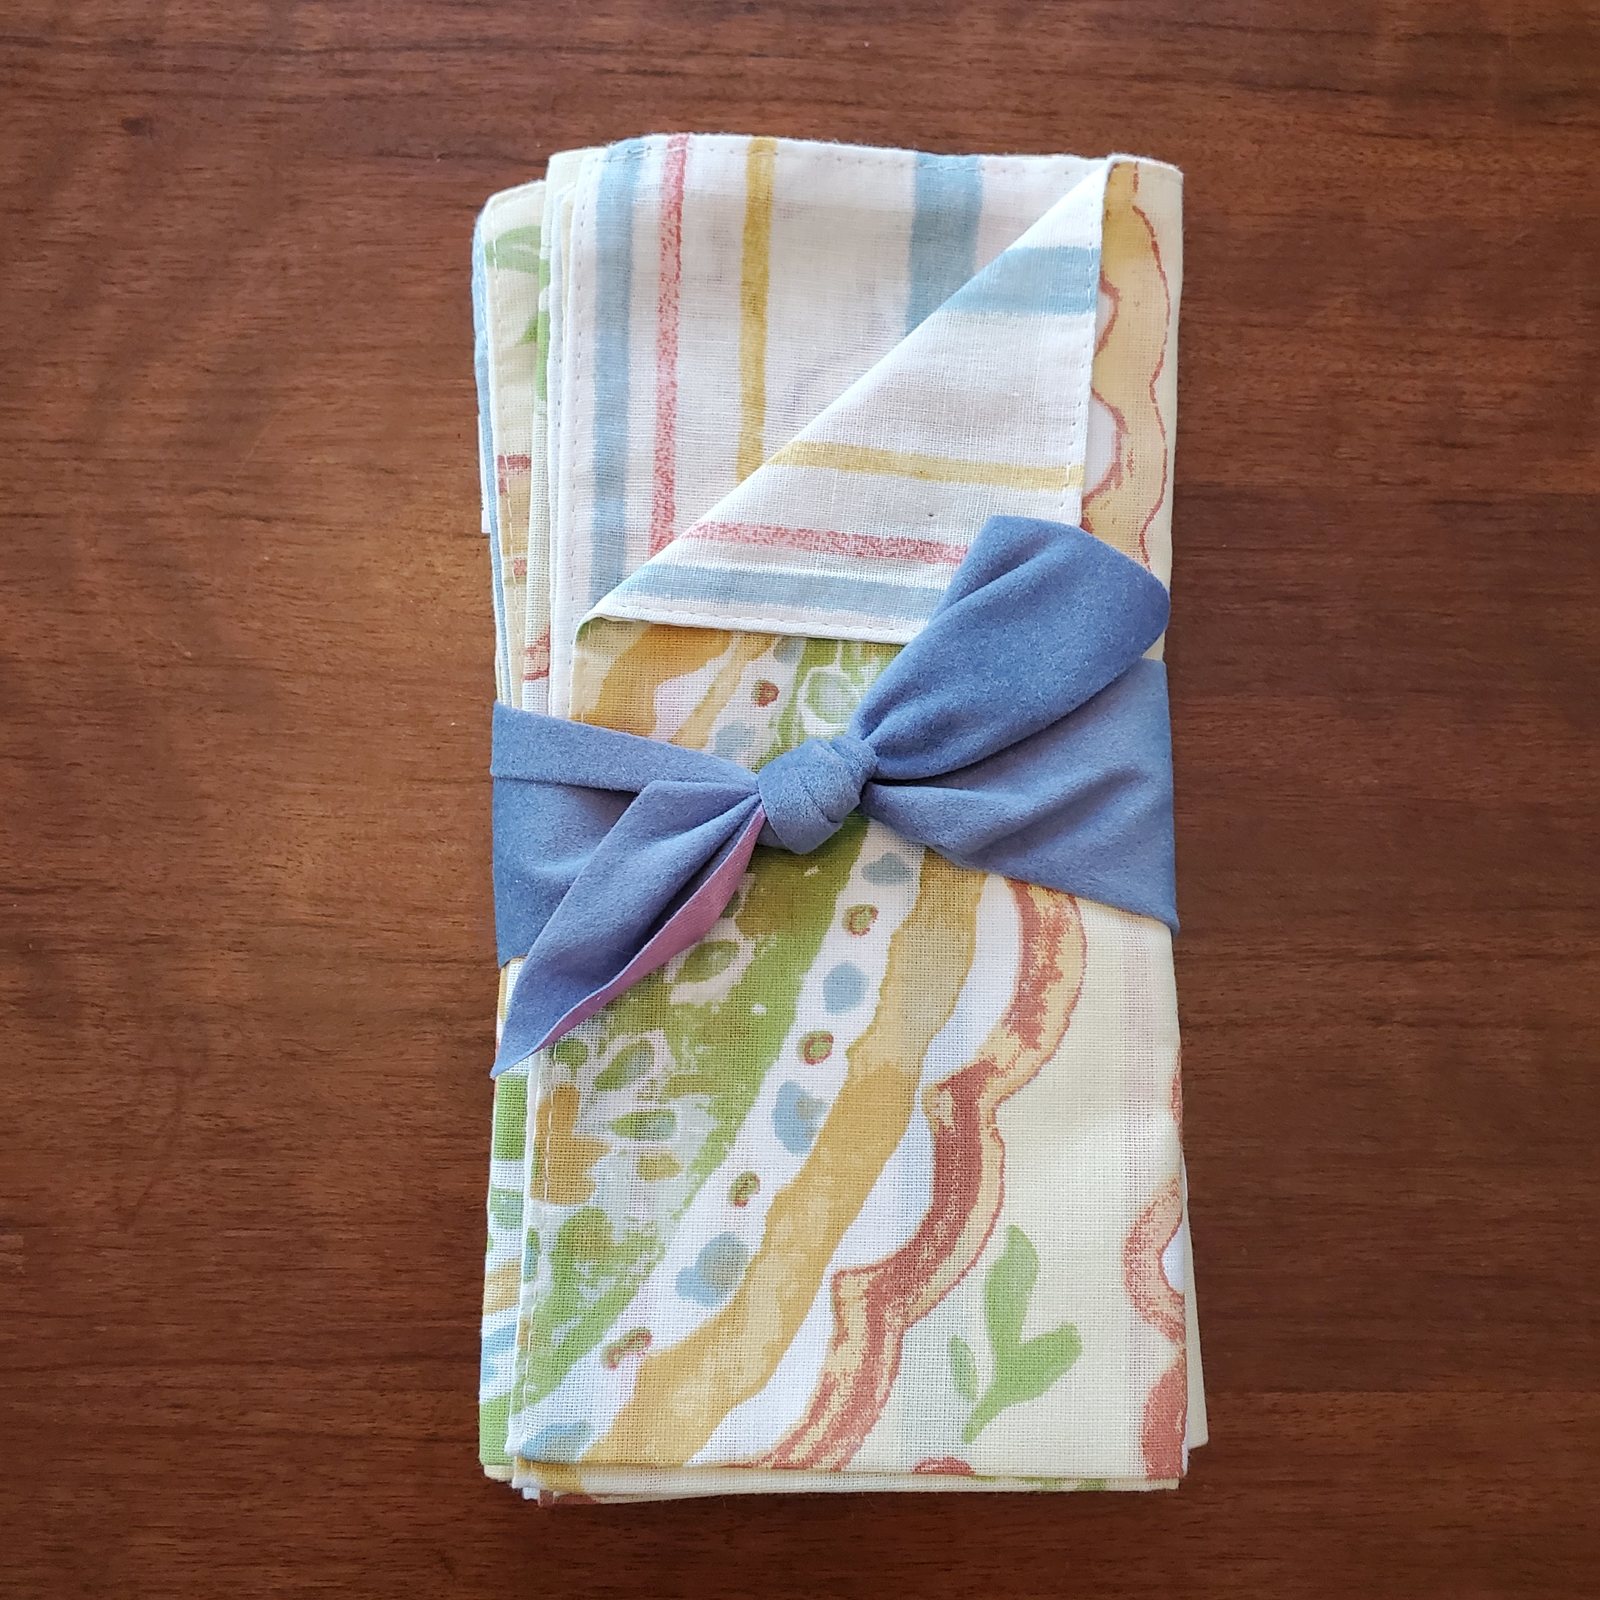 C&F Kylie Napkins, set of 4 reversible cloth napkins, colorful floral stripes - $16.99